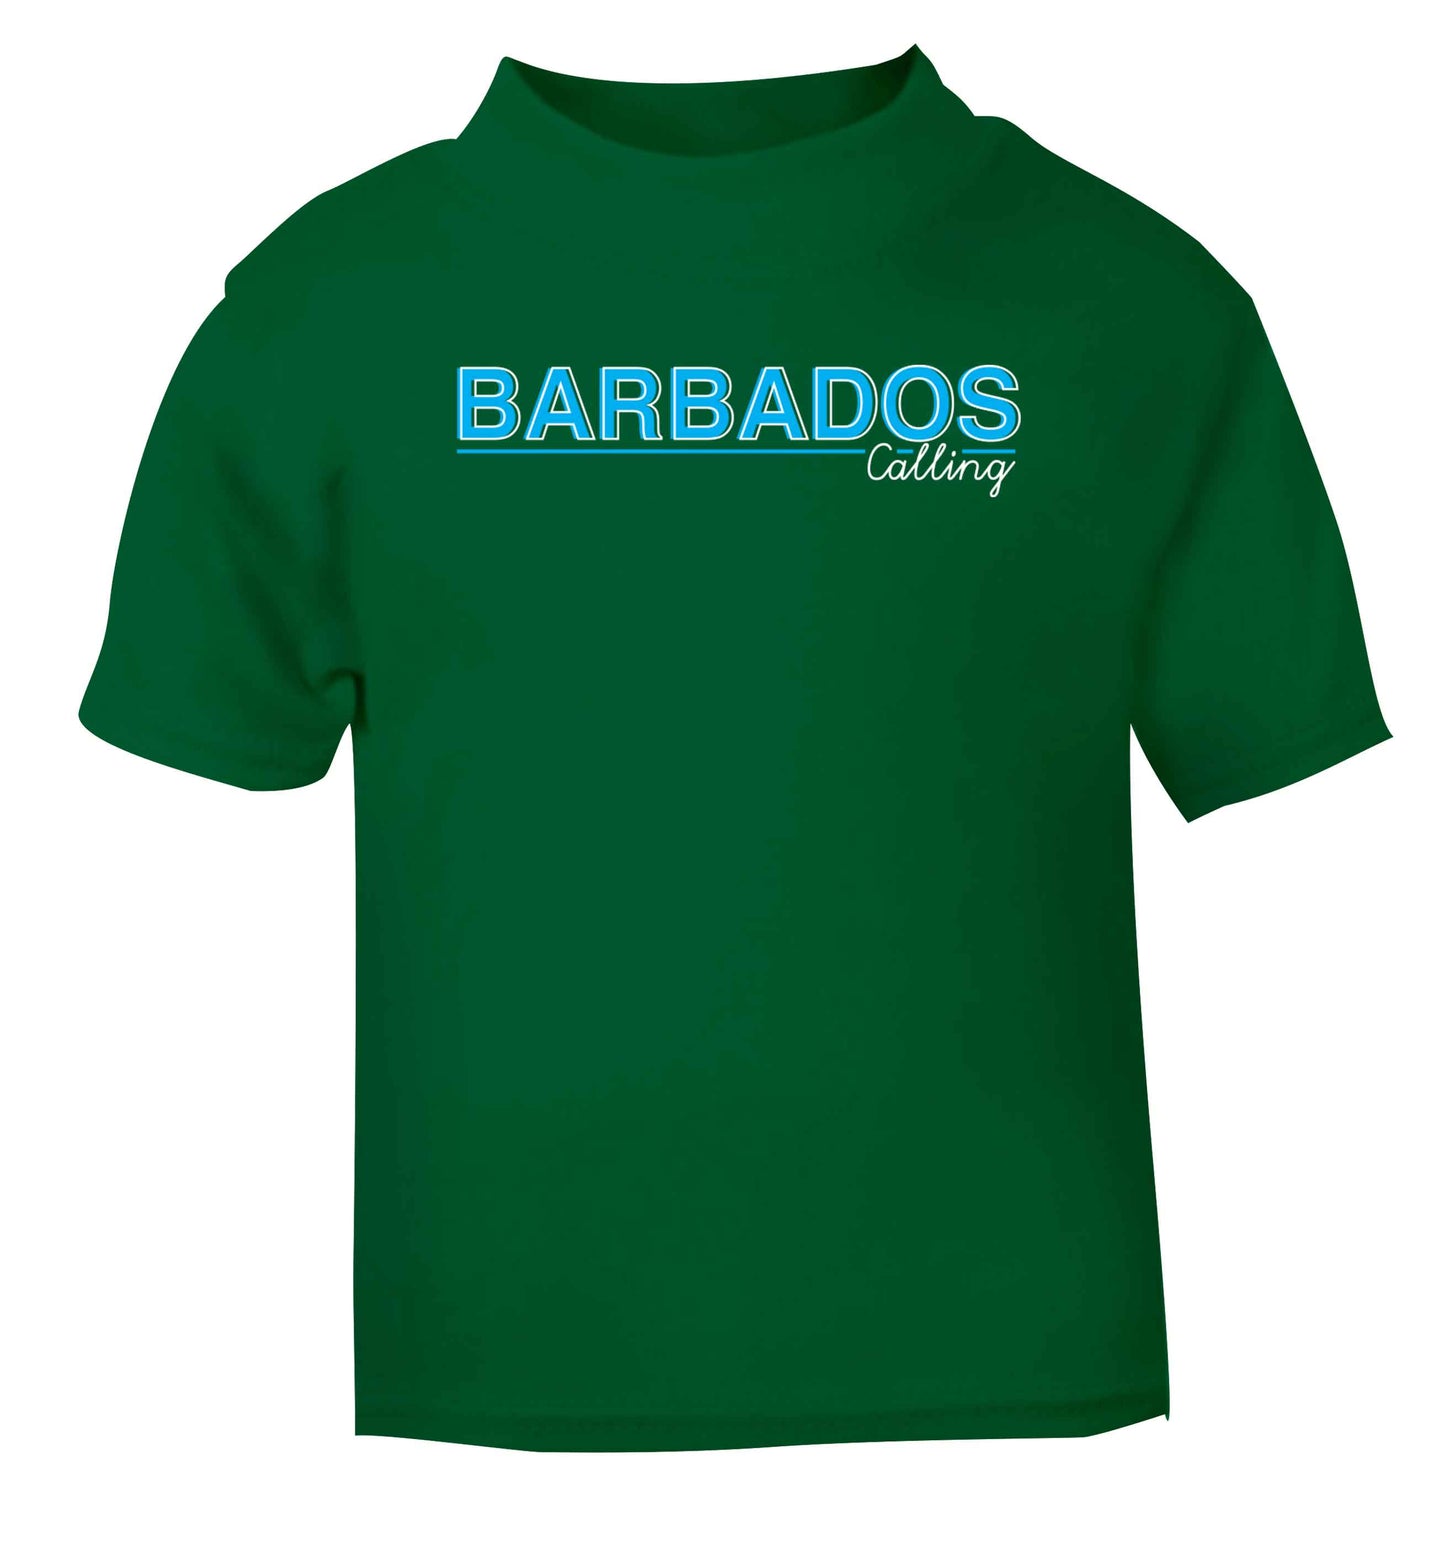 Barbados calling green Baby Toddler Tshirt 2 Years